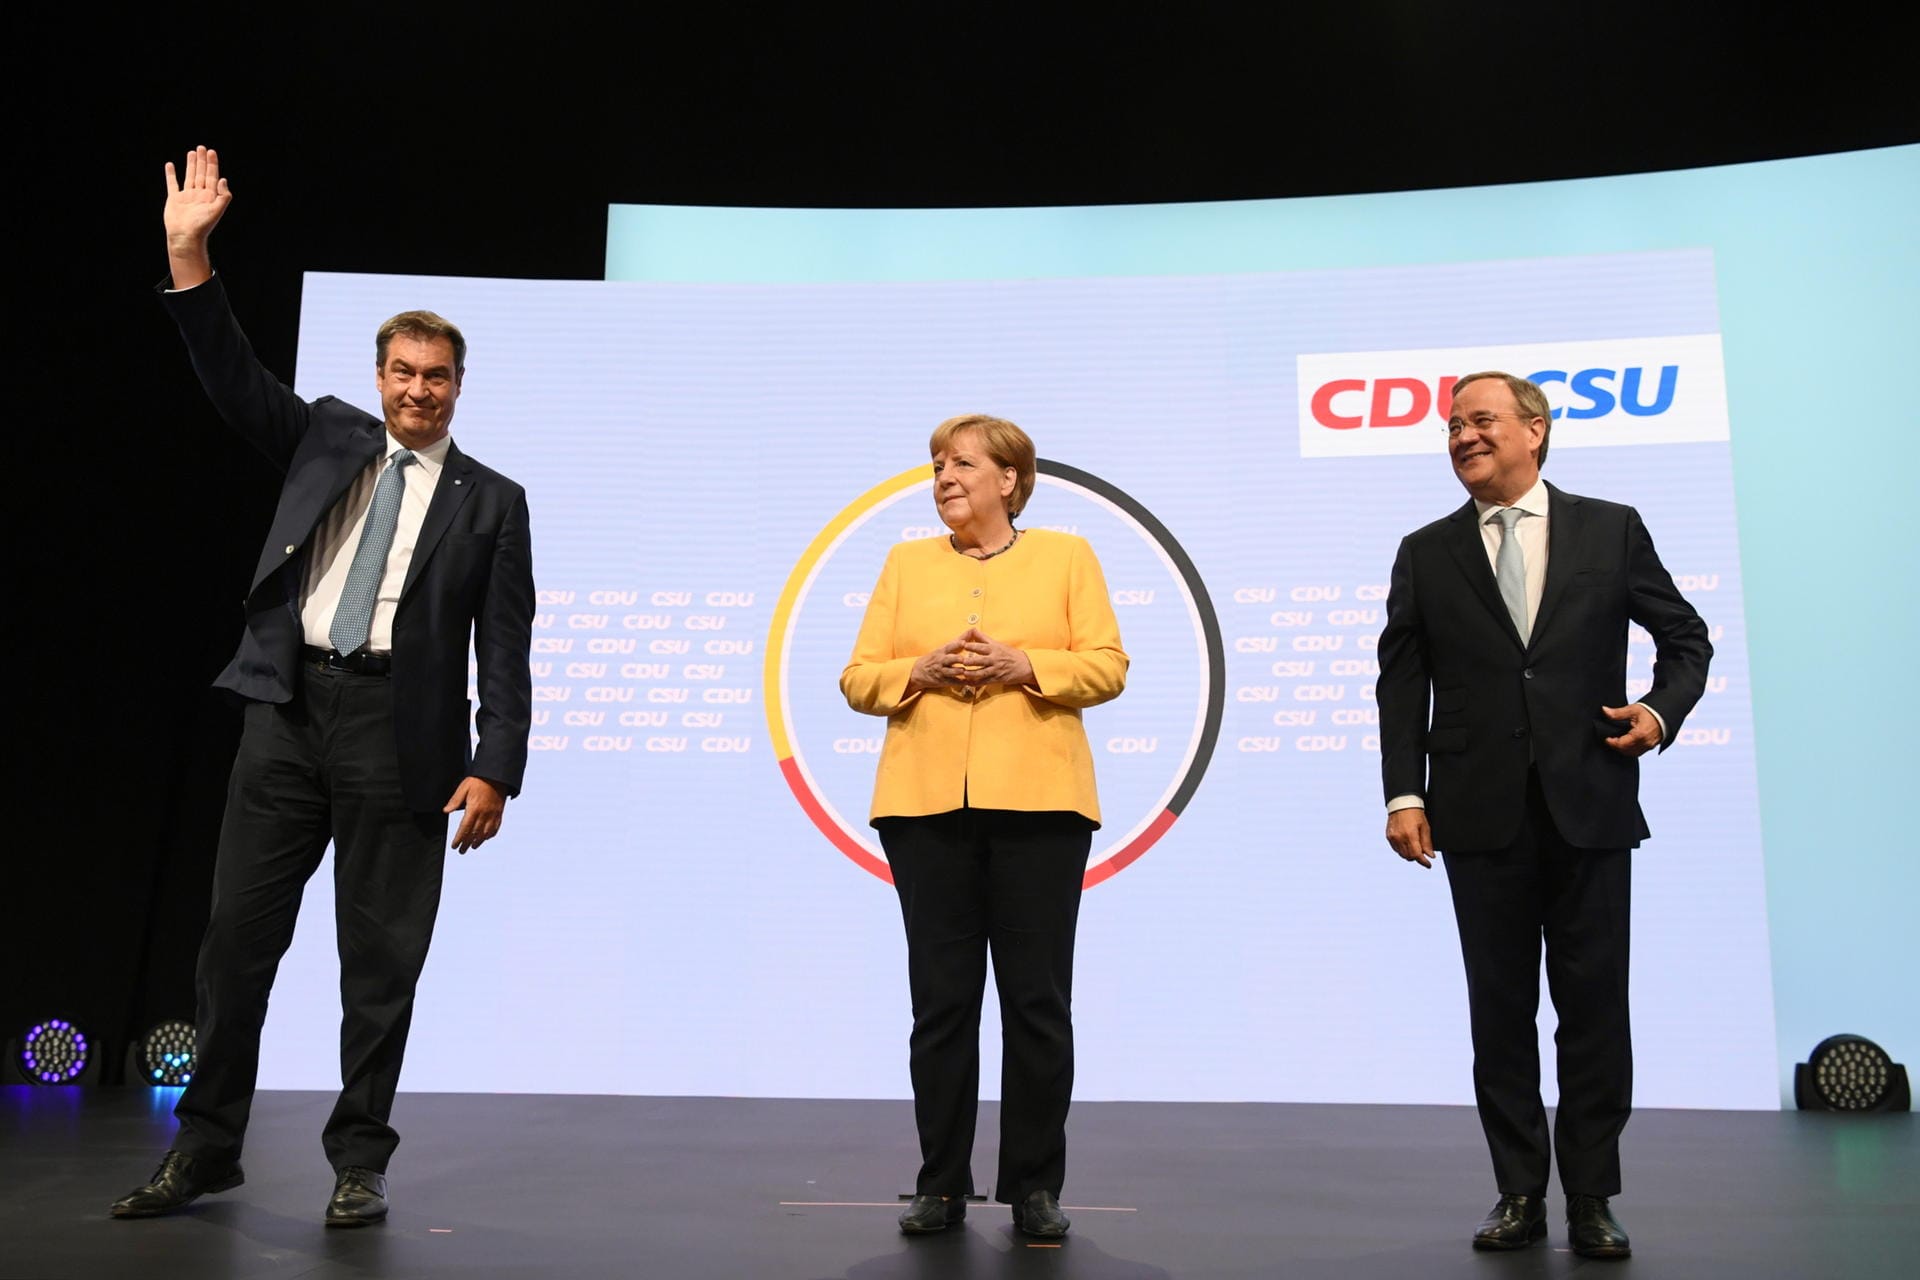 CDU/CSU election campaign kick-off